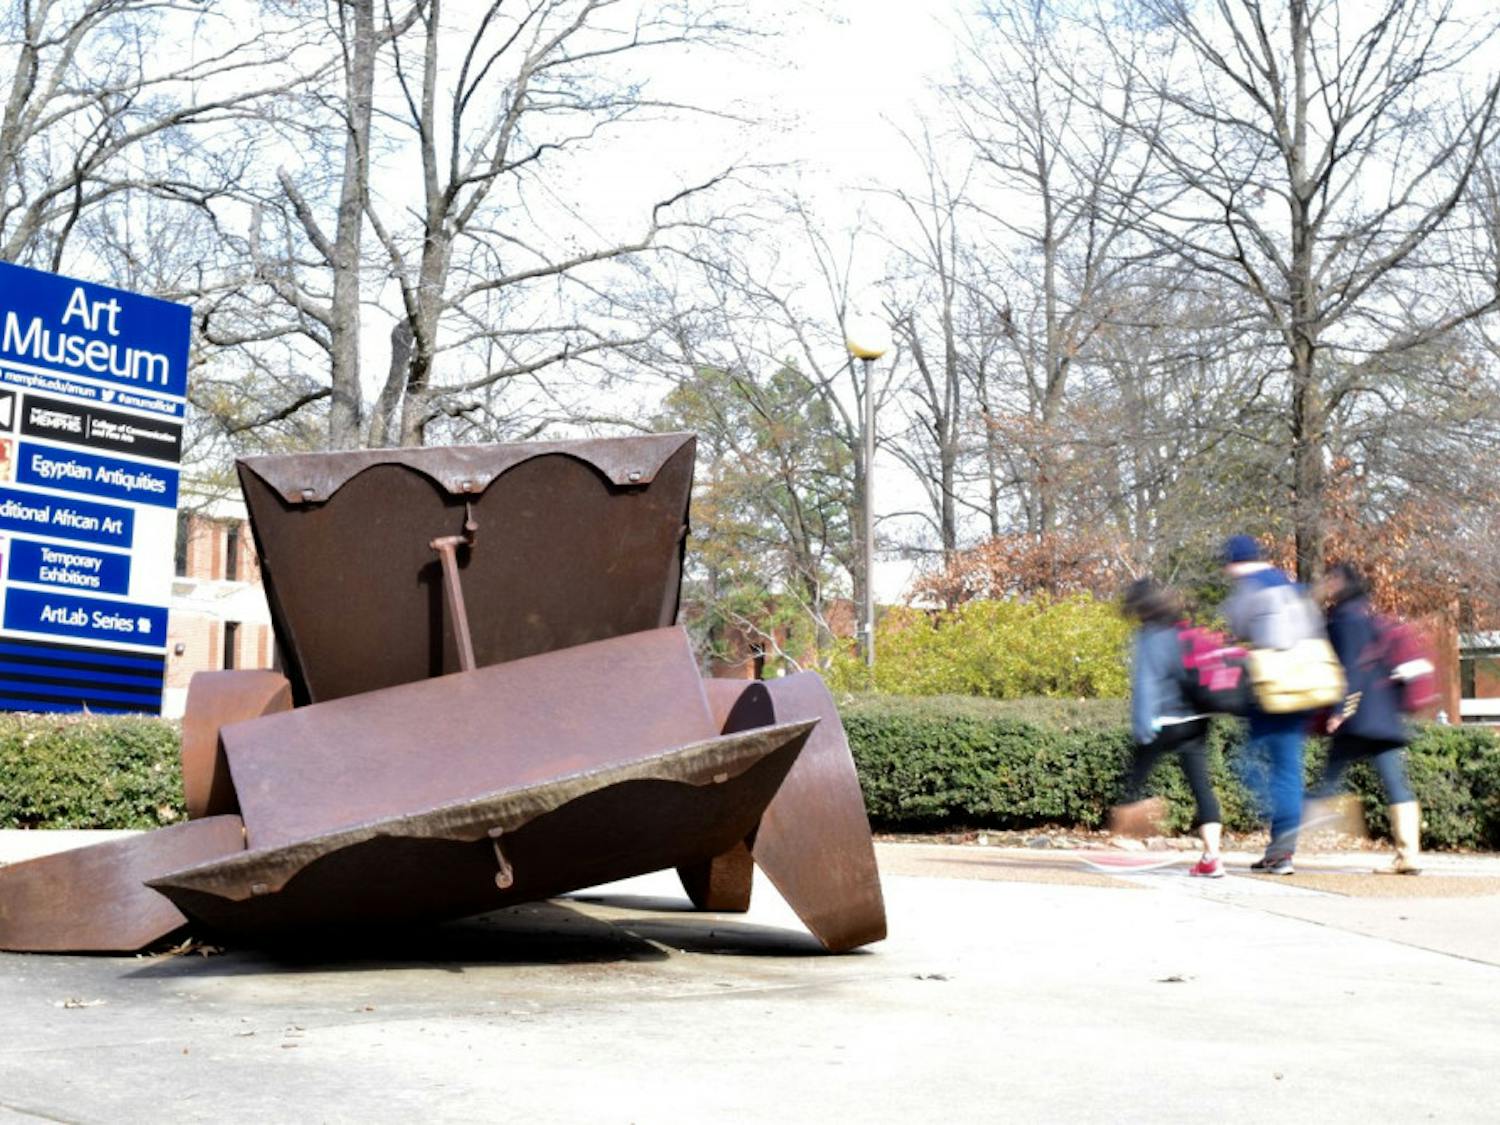 Campus art falling apart